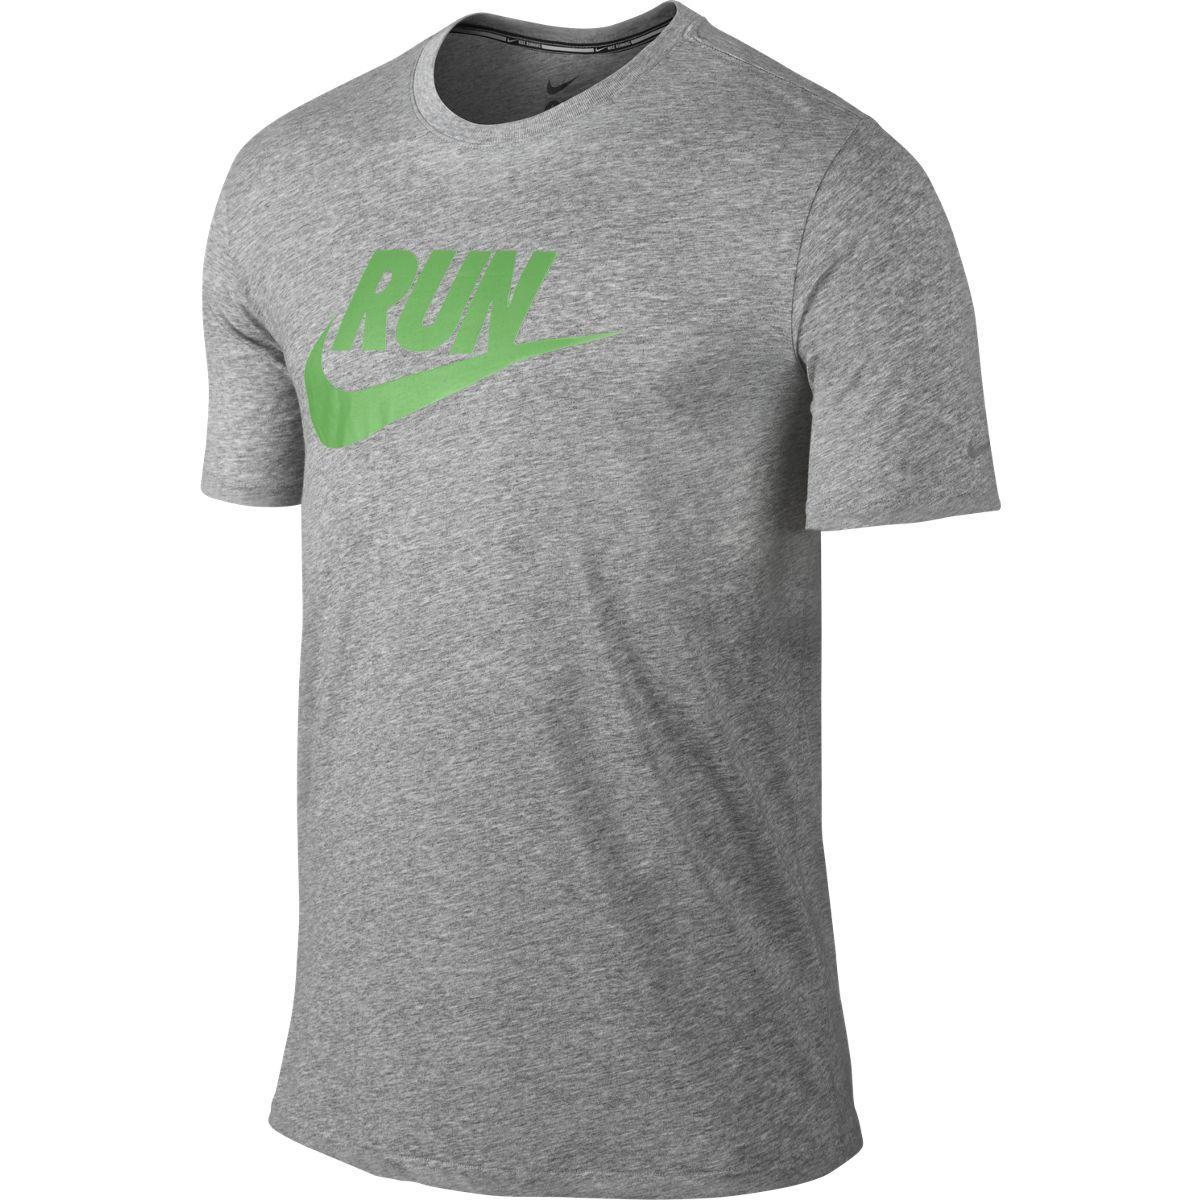 Nike Mens Swoosh Running T-Shirt - Dark Grey Heather/Green - Tennisnuts.com